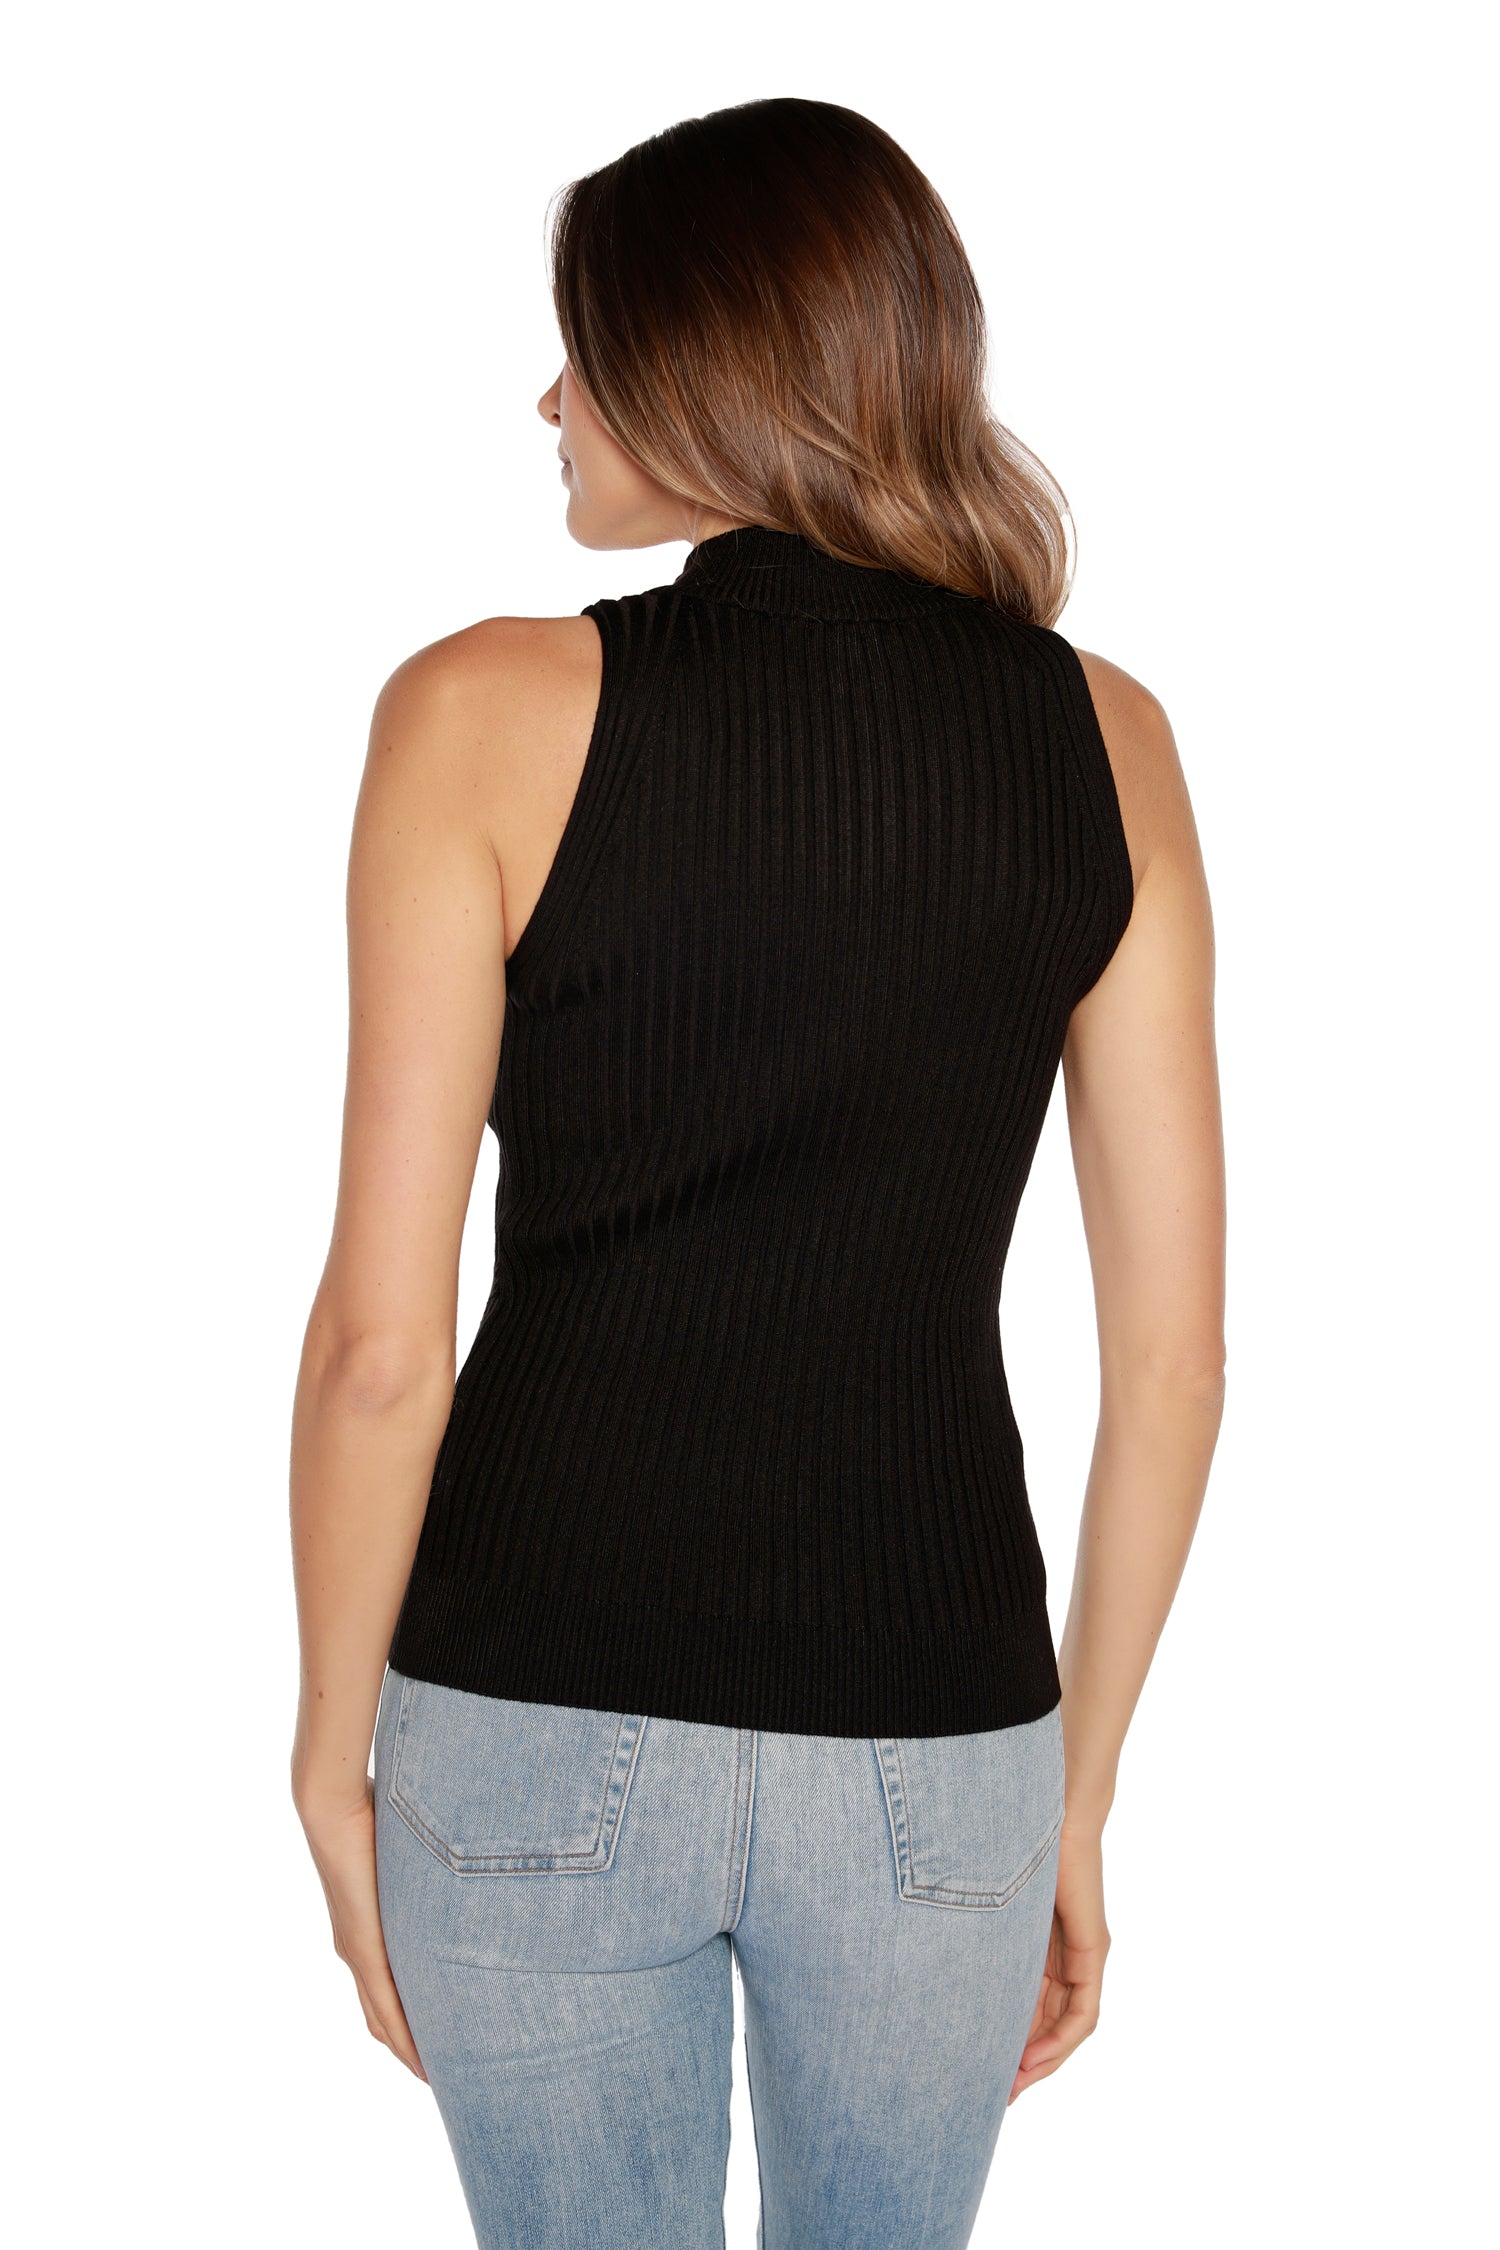 Sleeveless Halter Sweater for Women with Gold Zipper